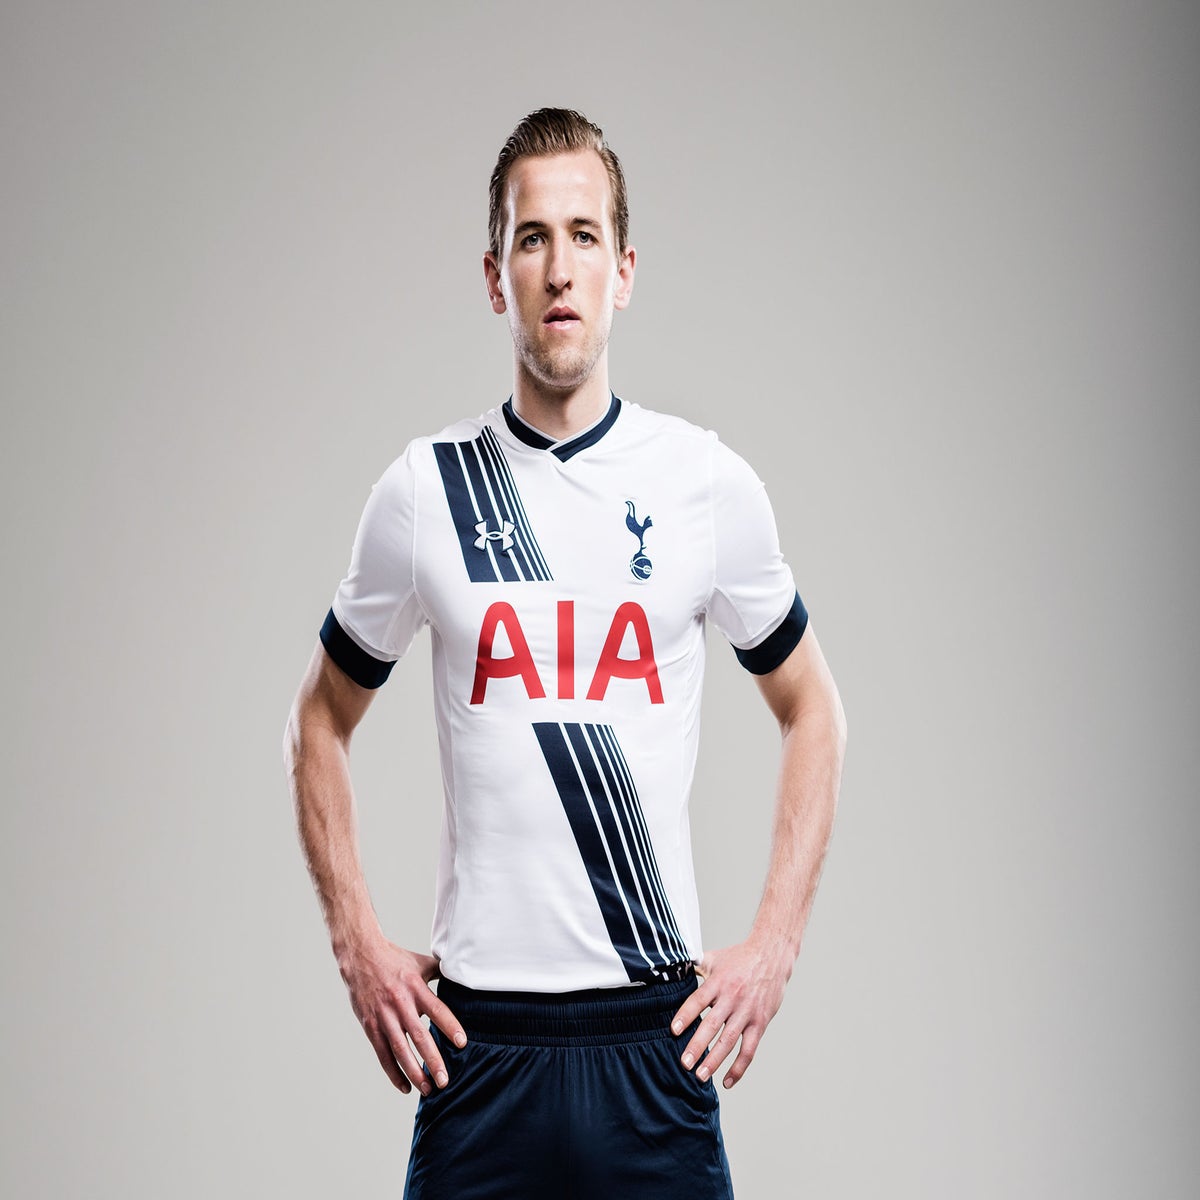 Tottenham Hotspur 2015/16 shirt unveiled: £45m Manchester United